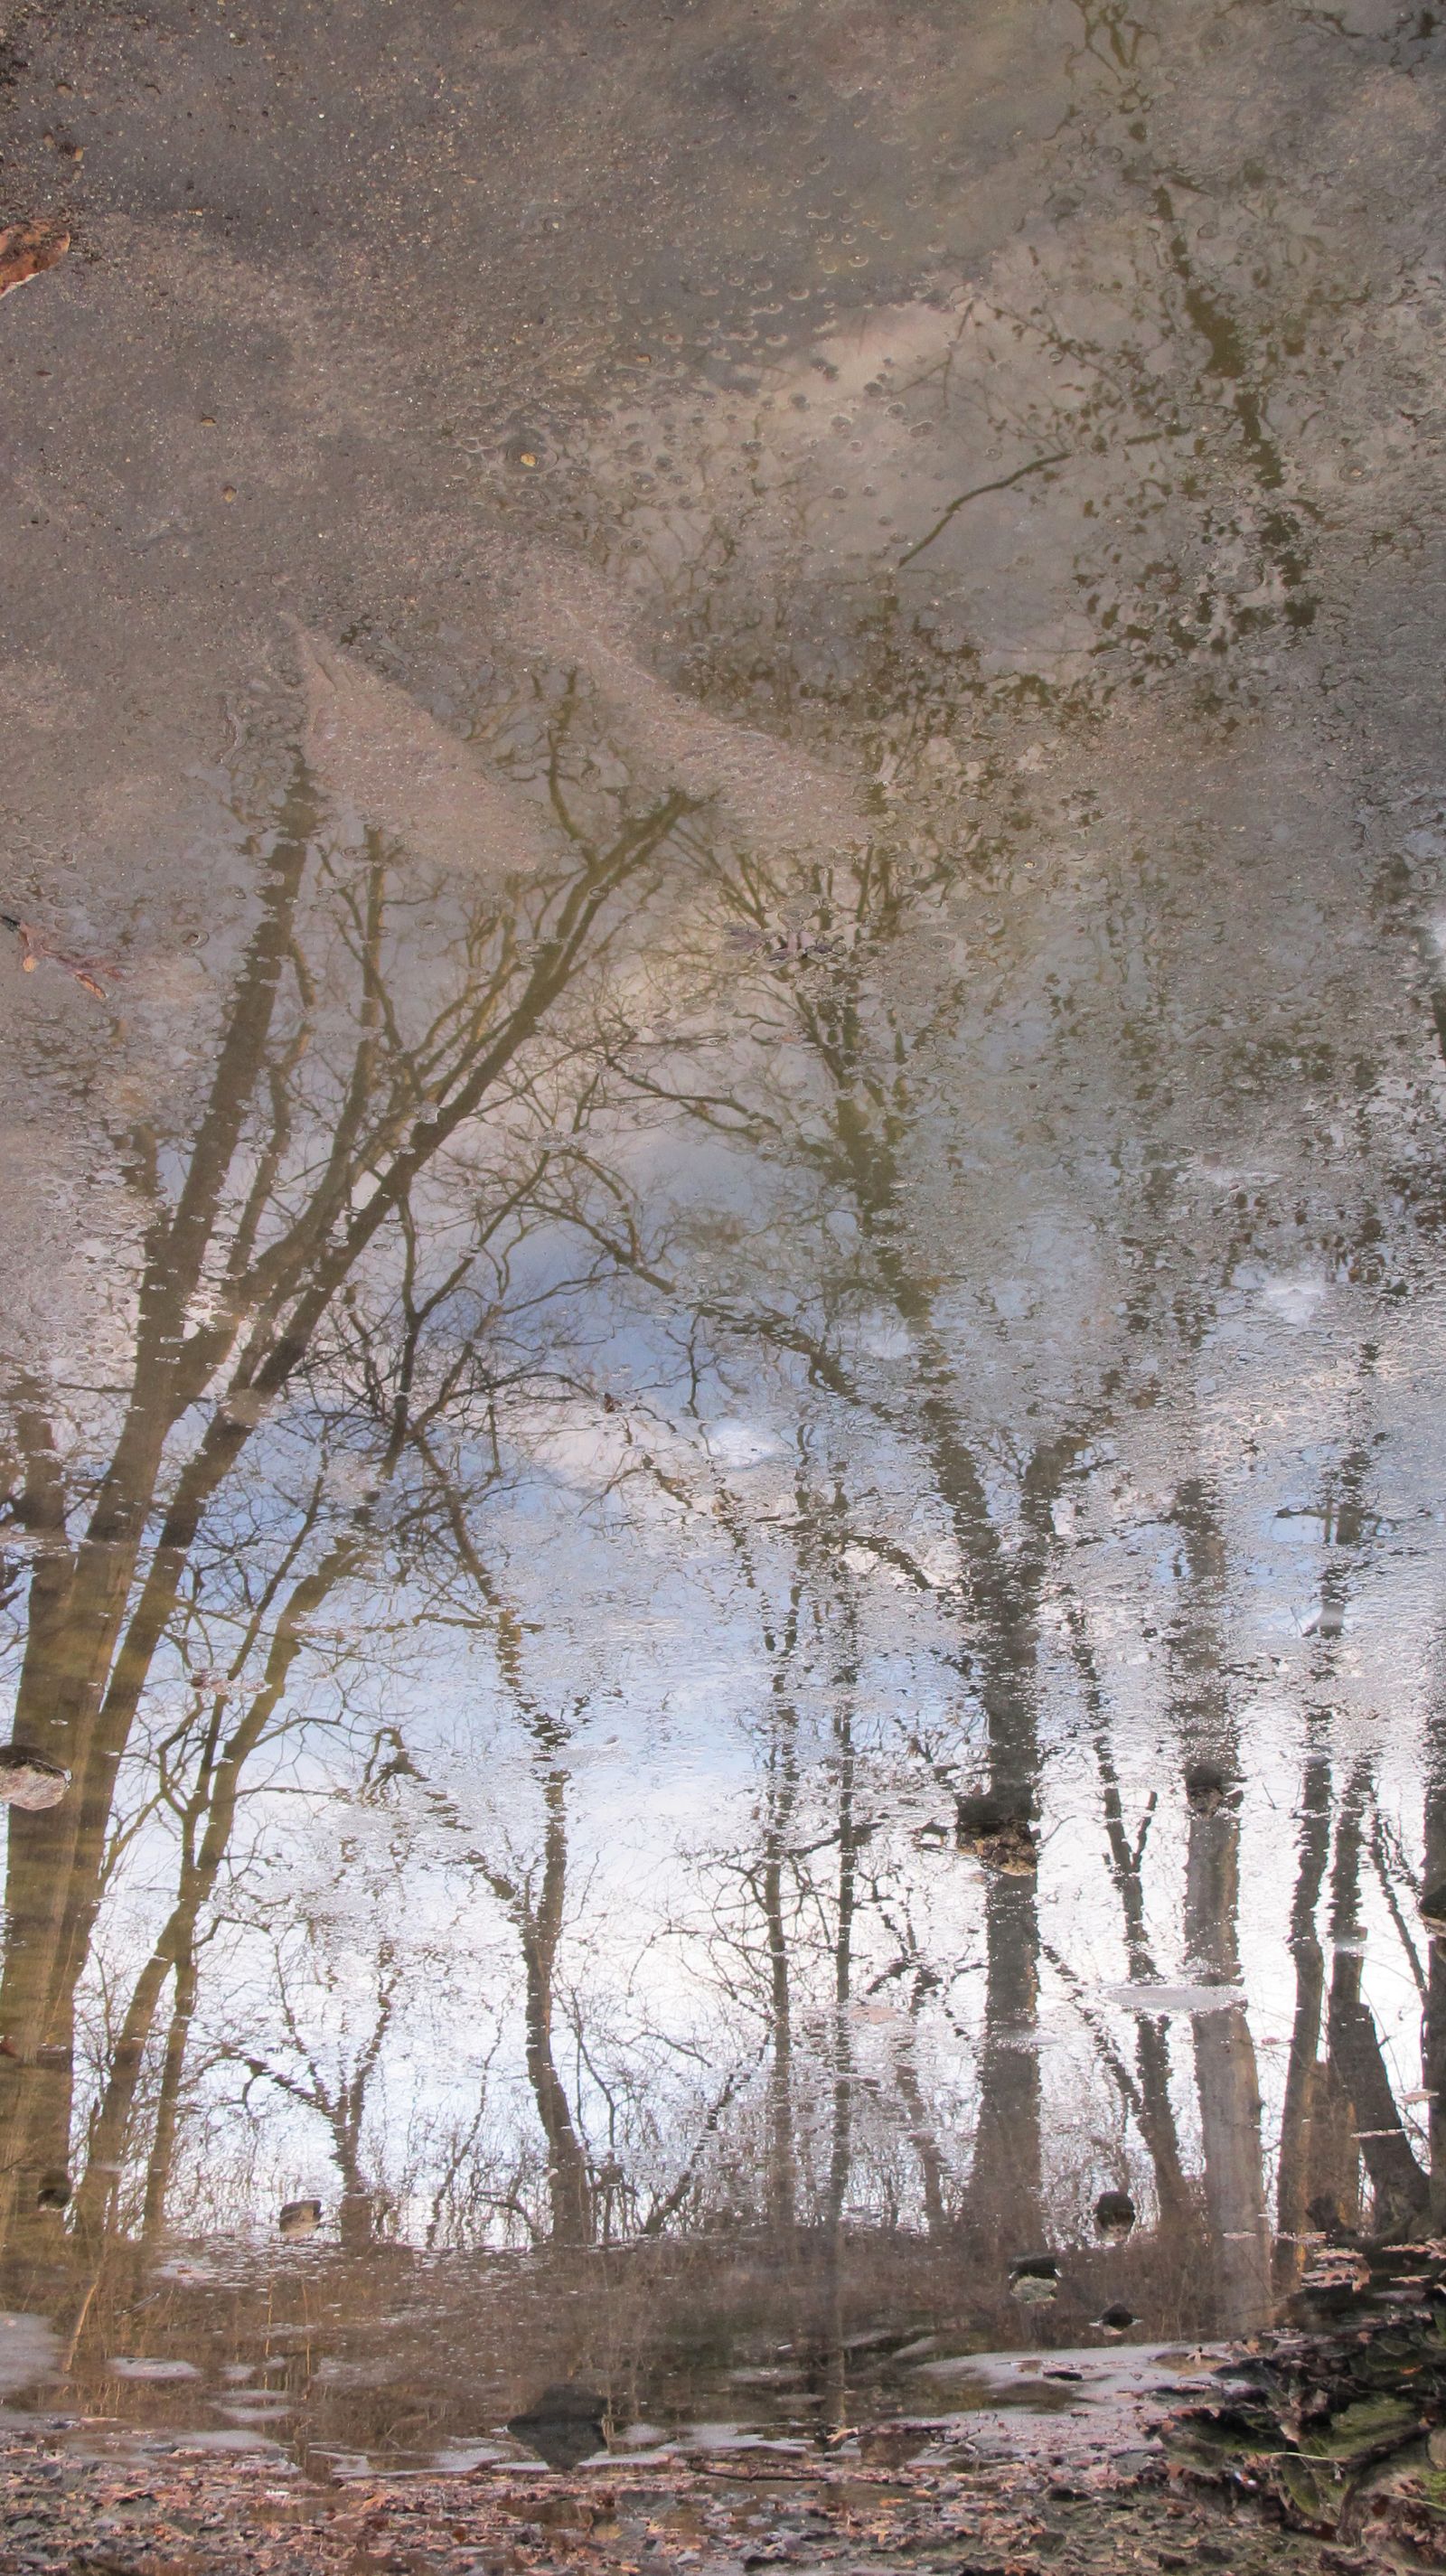 © Cristina Erdmann - "Frozen Trees" Wisconsin, United States, 2014